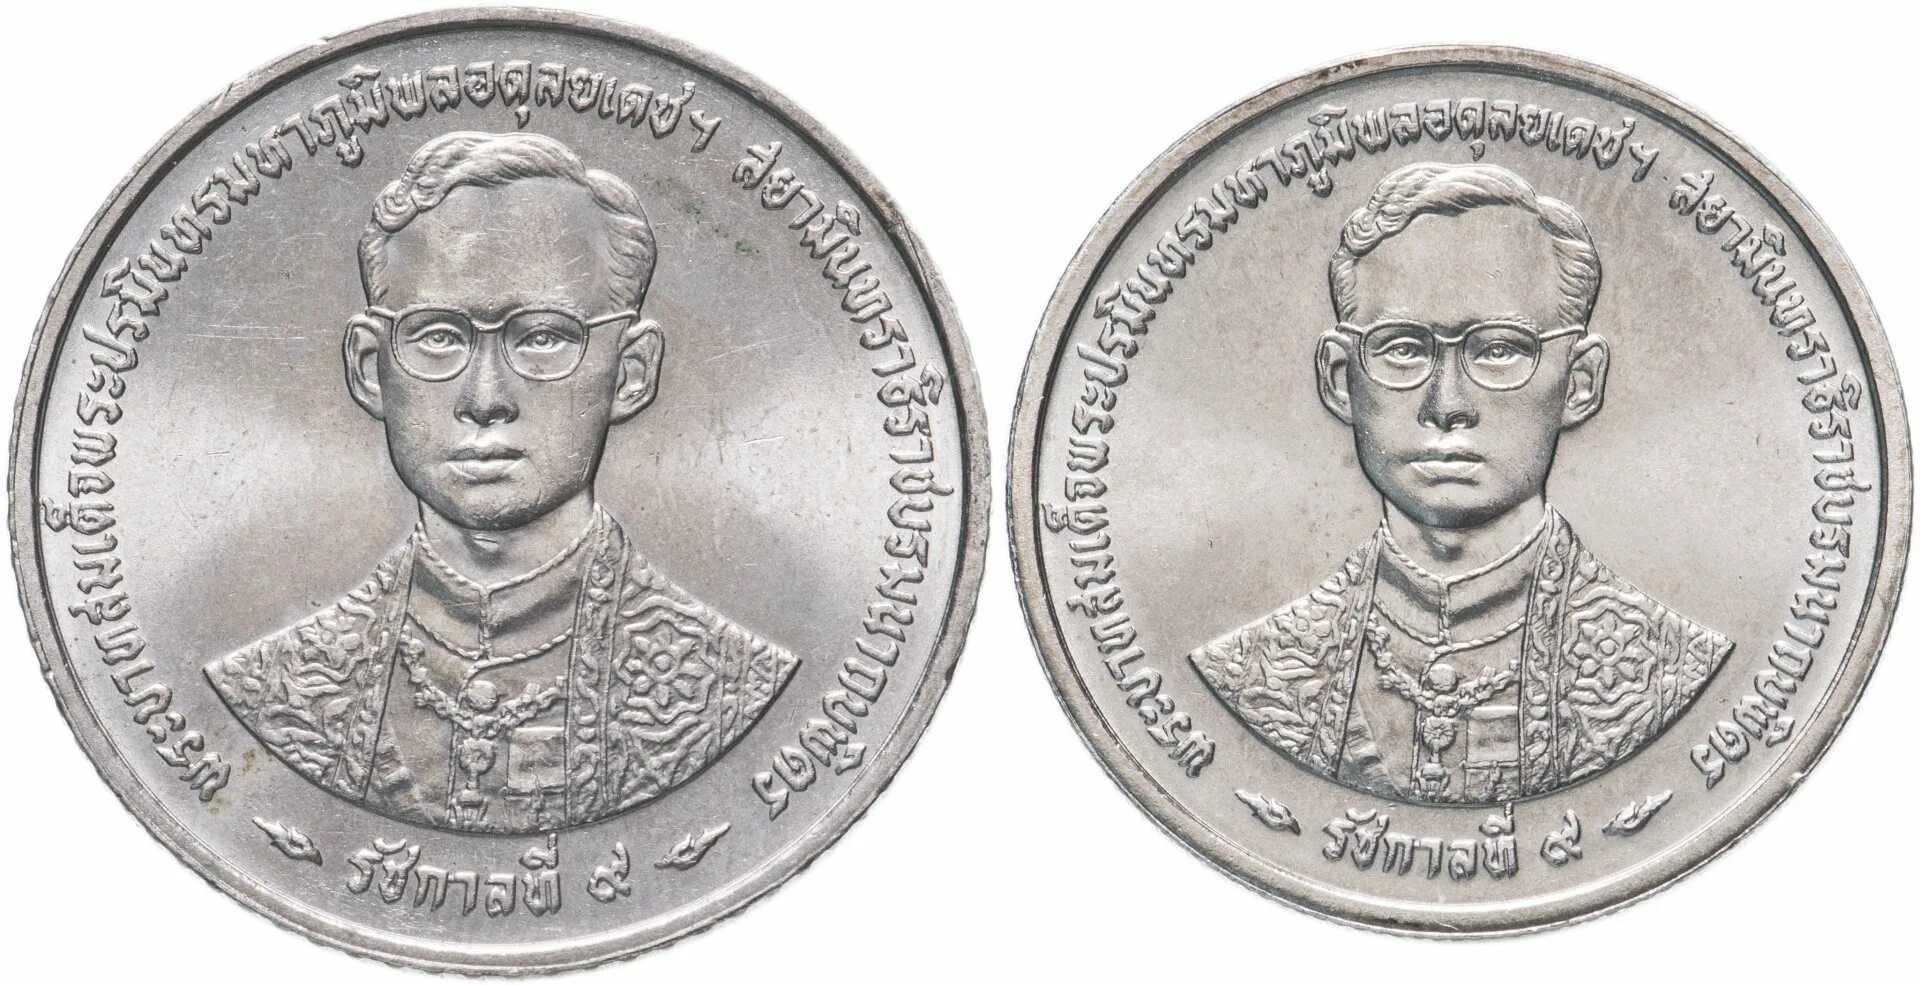 Таиландская монета 2 бата. Тайские монеты 2 бат. Монеты Тайланда. Король Тайланда на монетах.